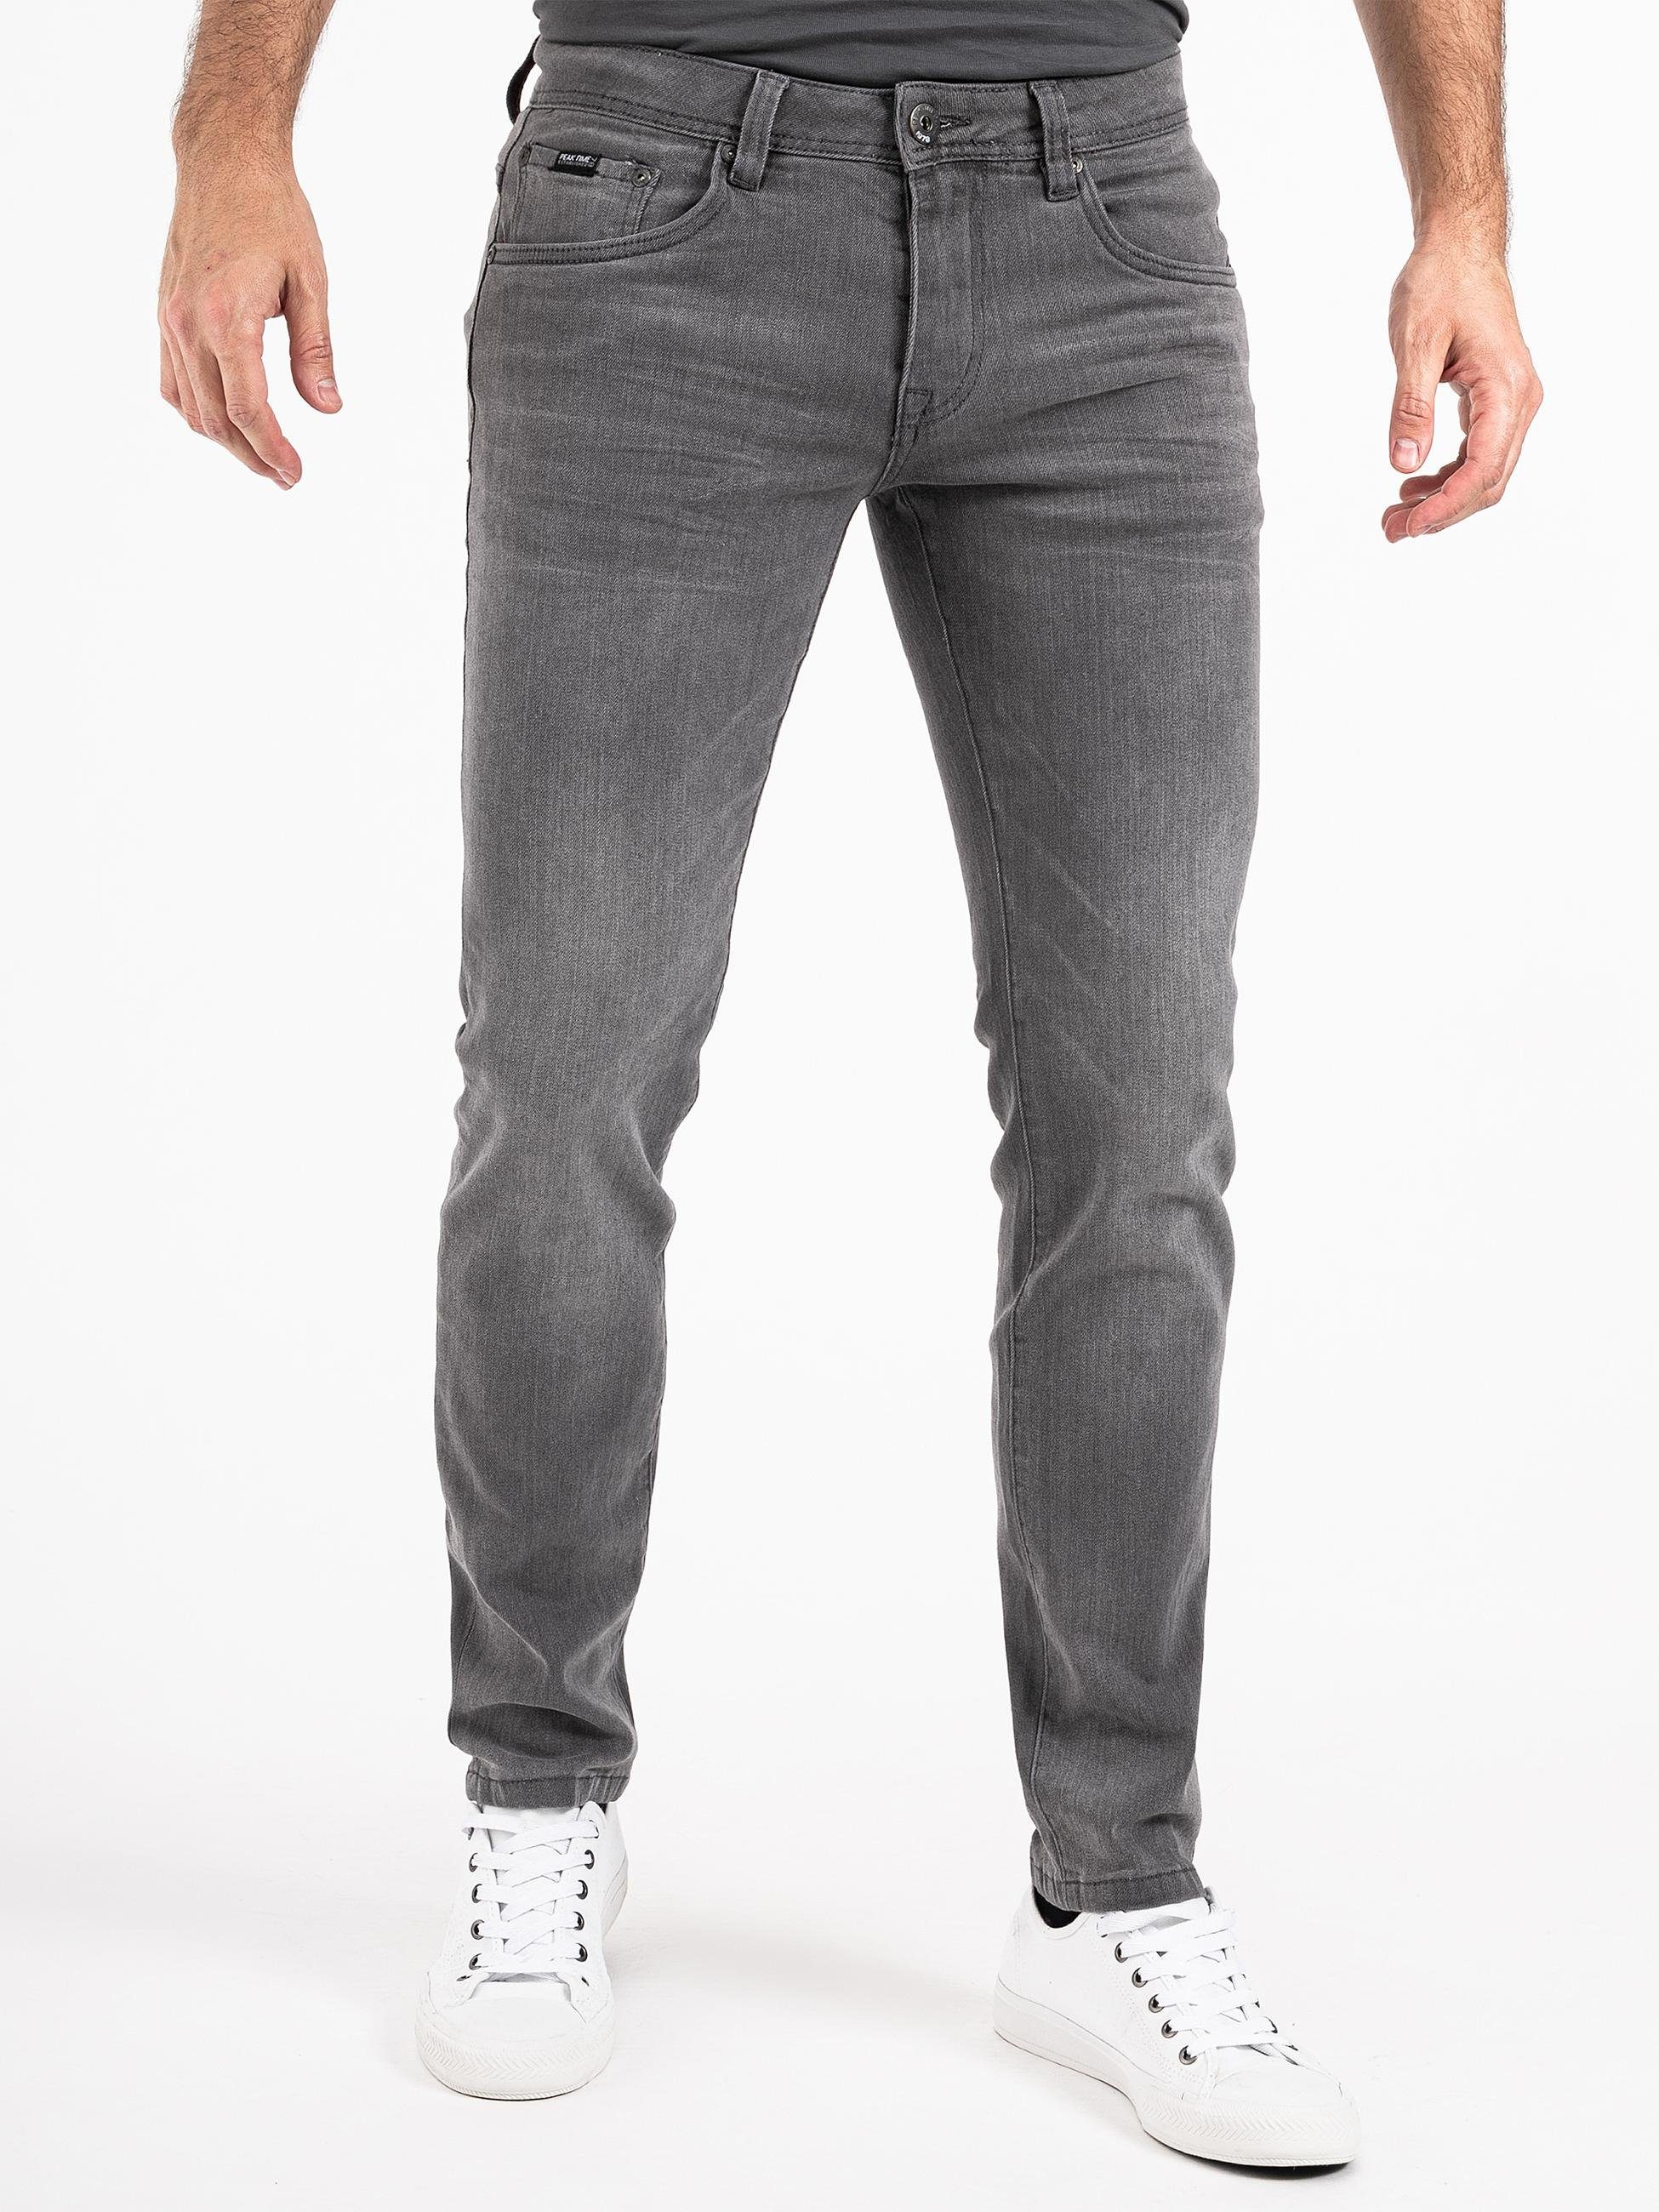 Jeans Herren Stretch-Anteil mit TIME Mailand super hellgrau PEAK Slim-fit-Jeans hohem